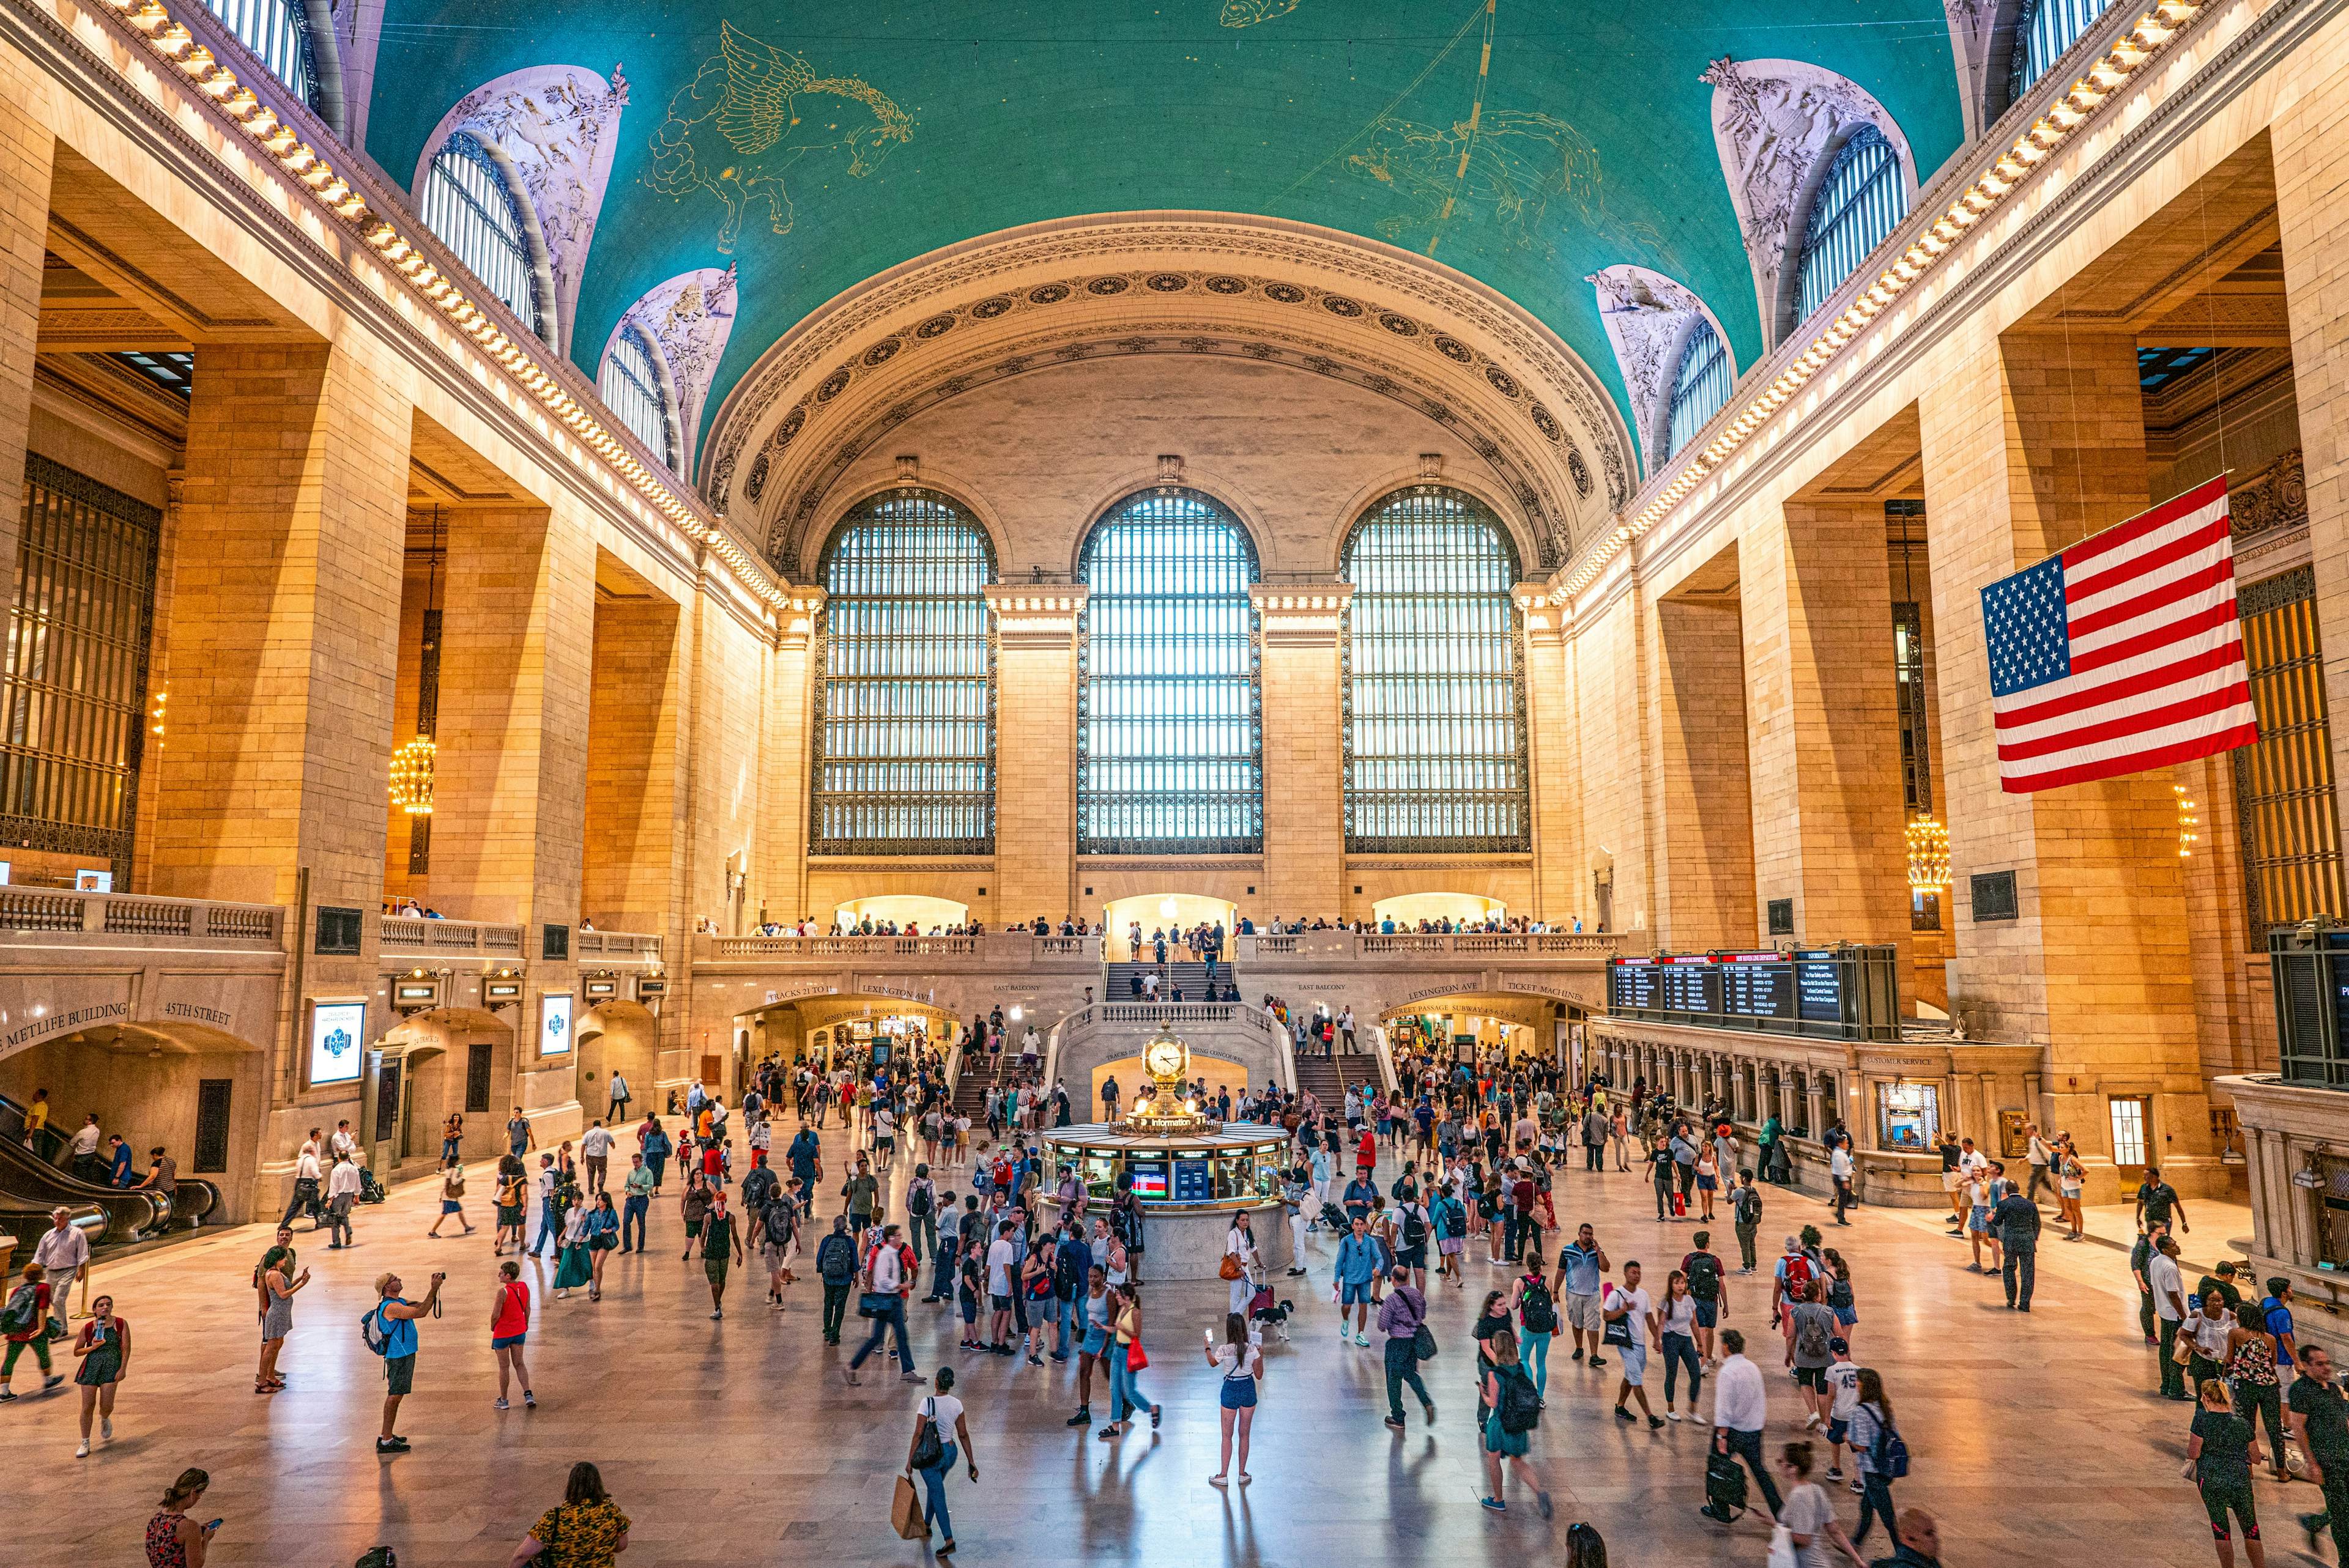 Grand Central Station image